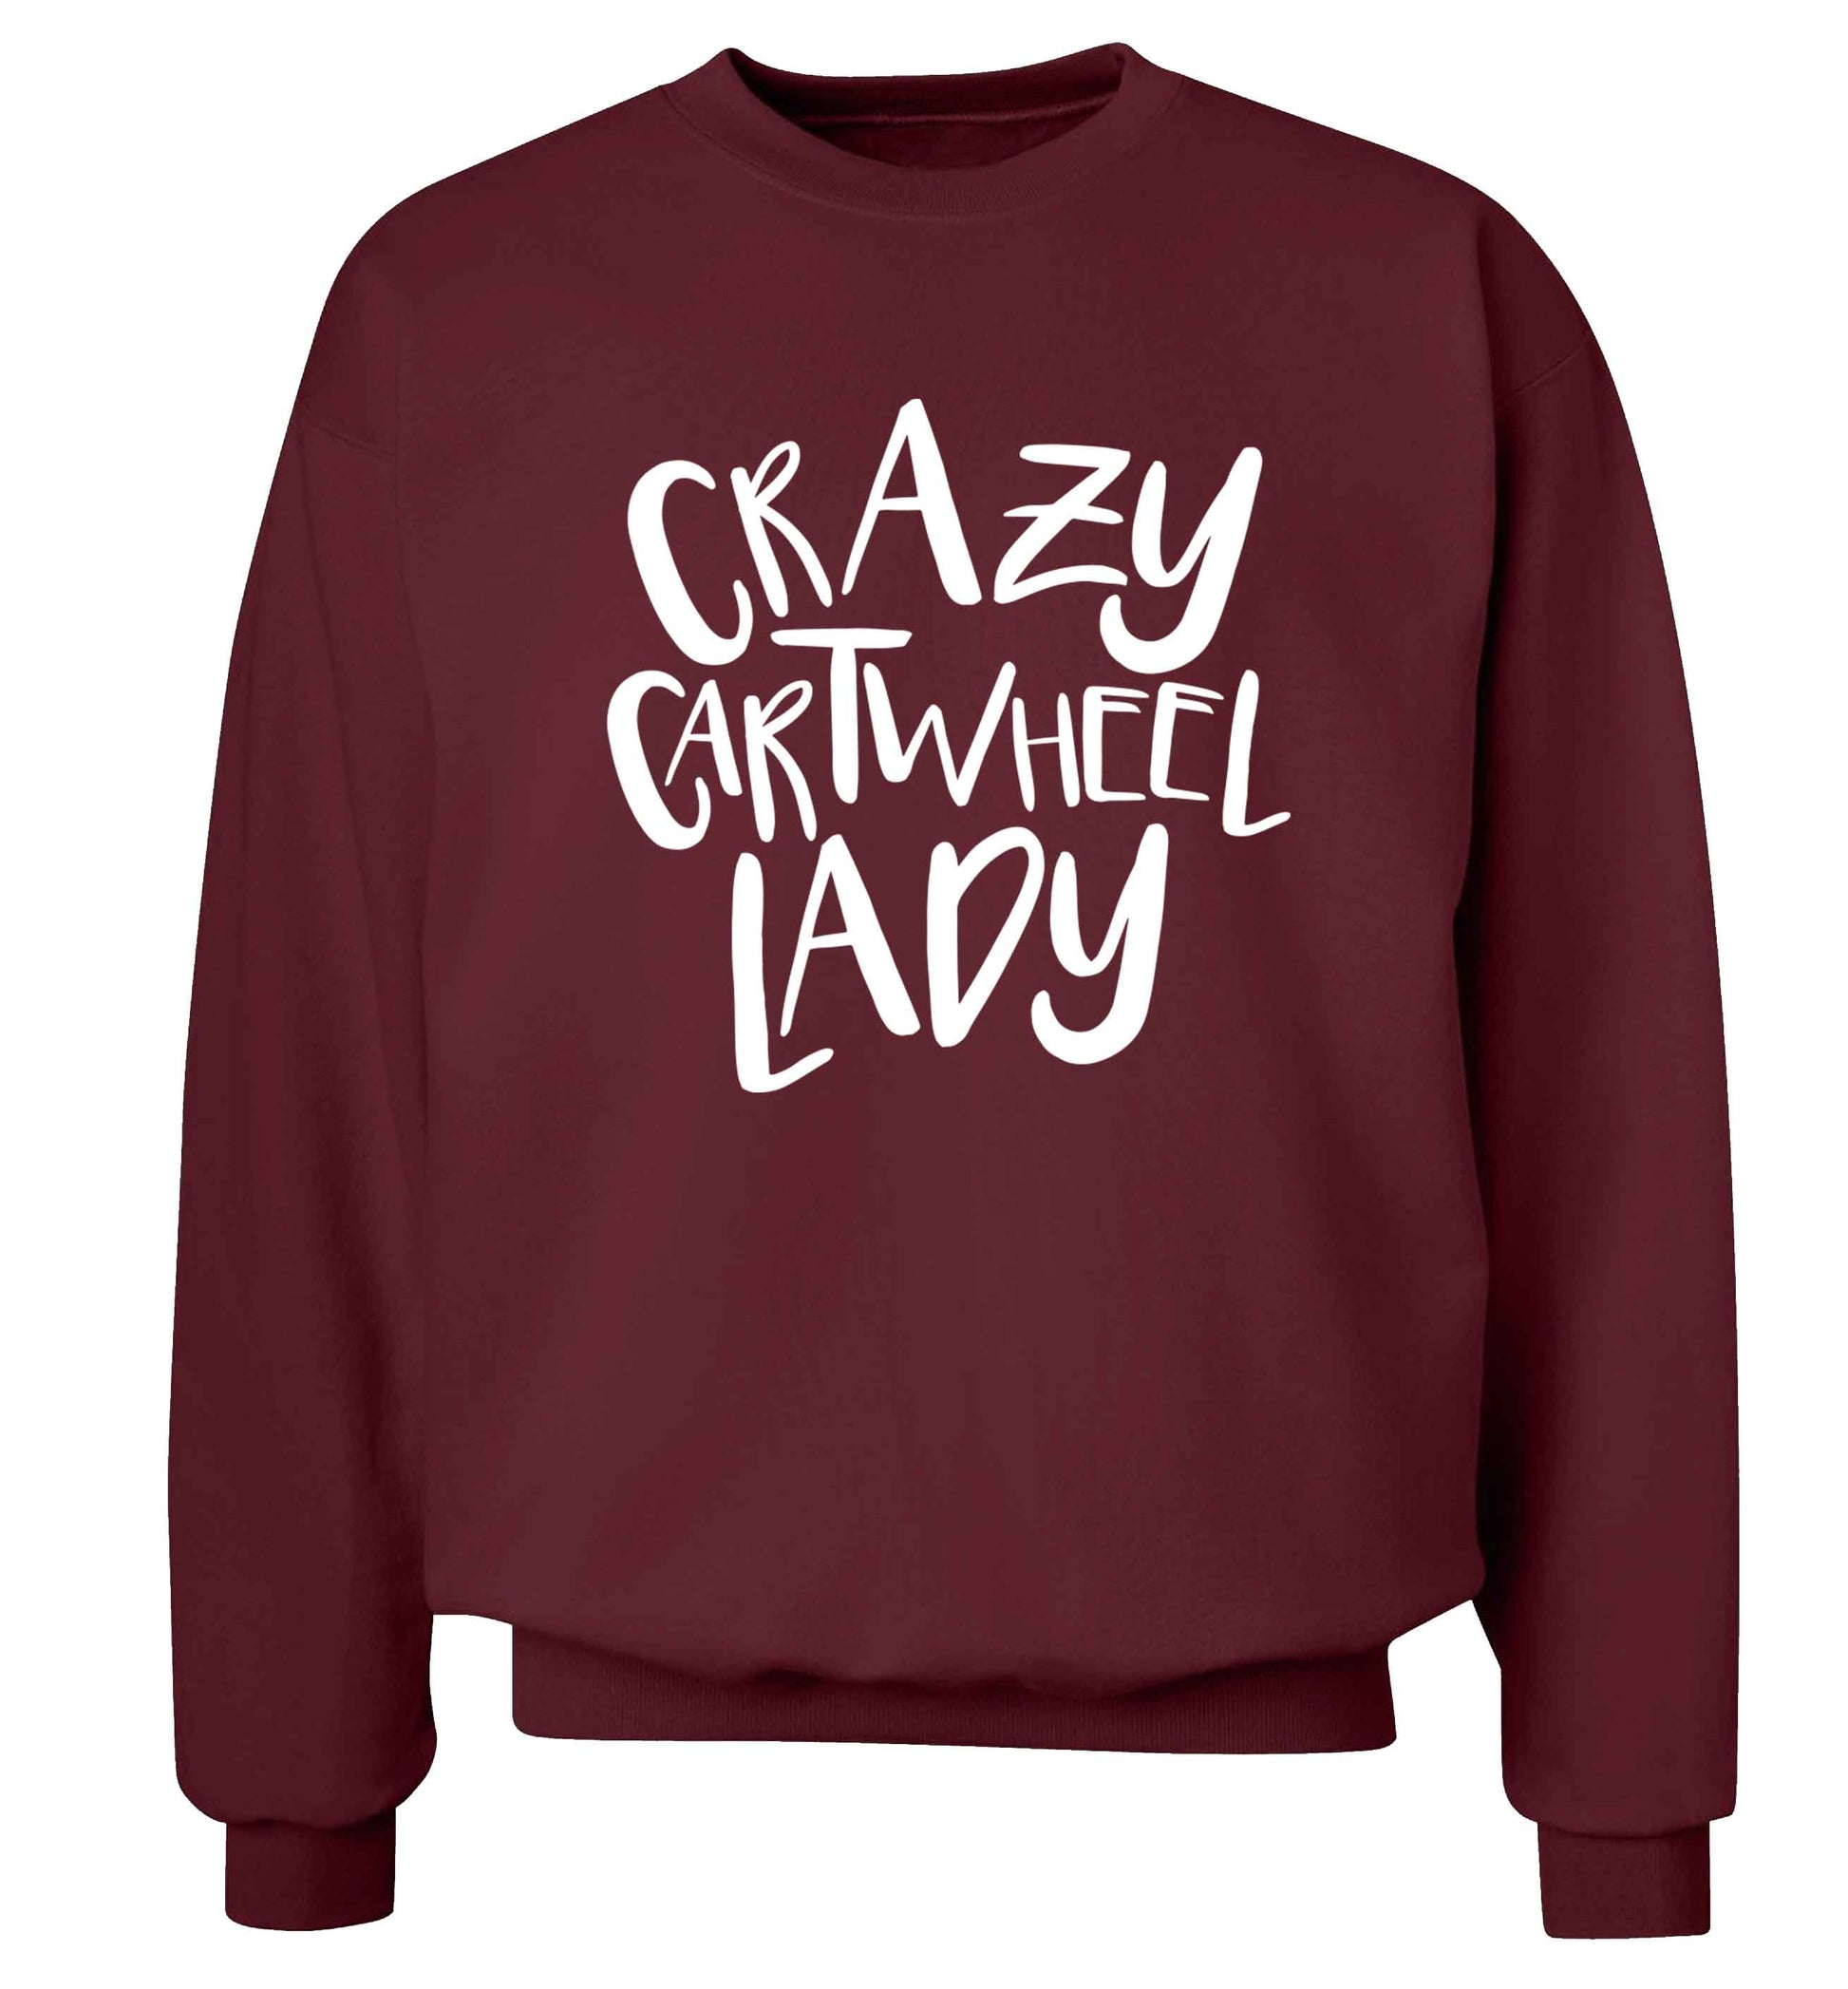 Crazy cartwheel lady Adult's unisex maroon Sweater 2XL